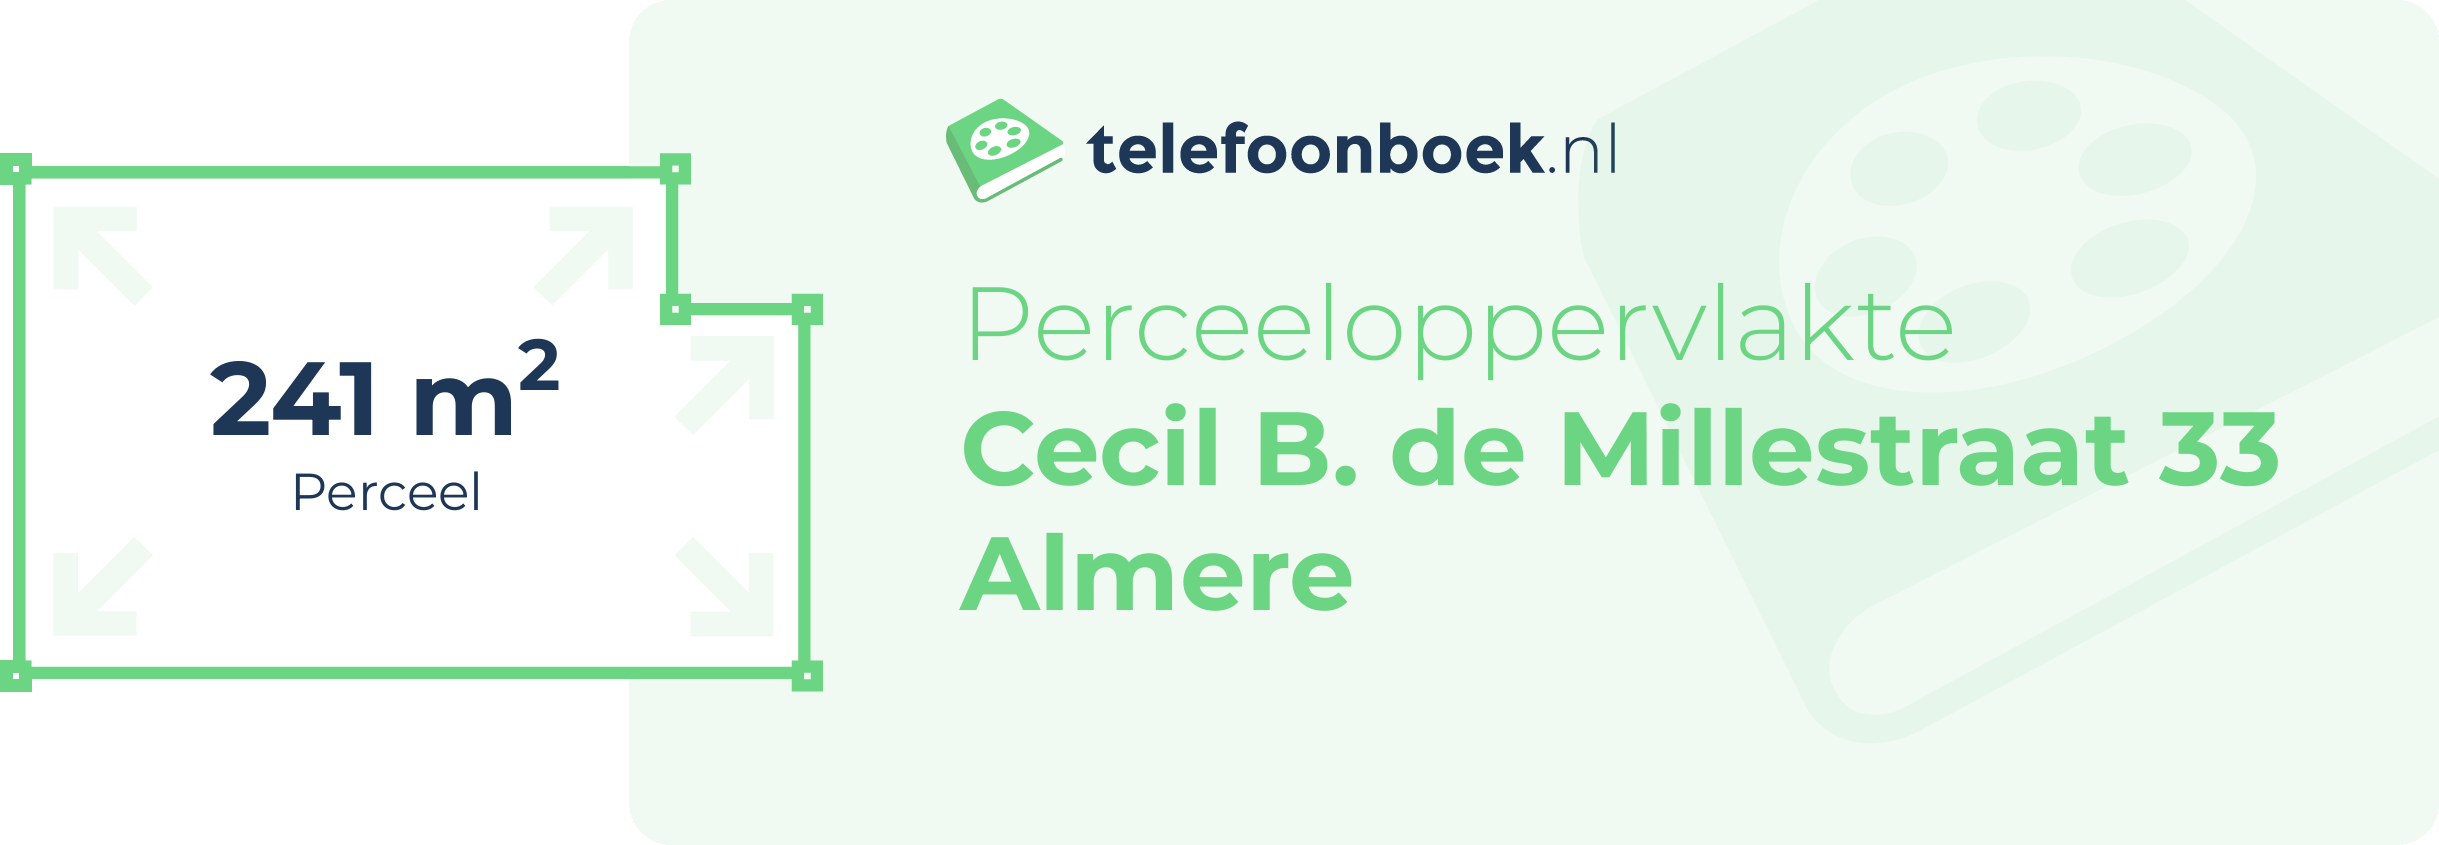 Perceeloppervlakte Cecil B. De Millestraat 33 Almere